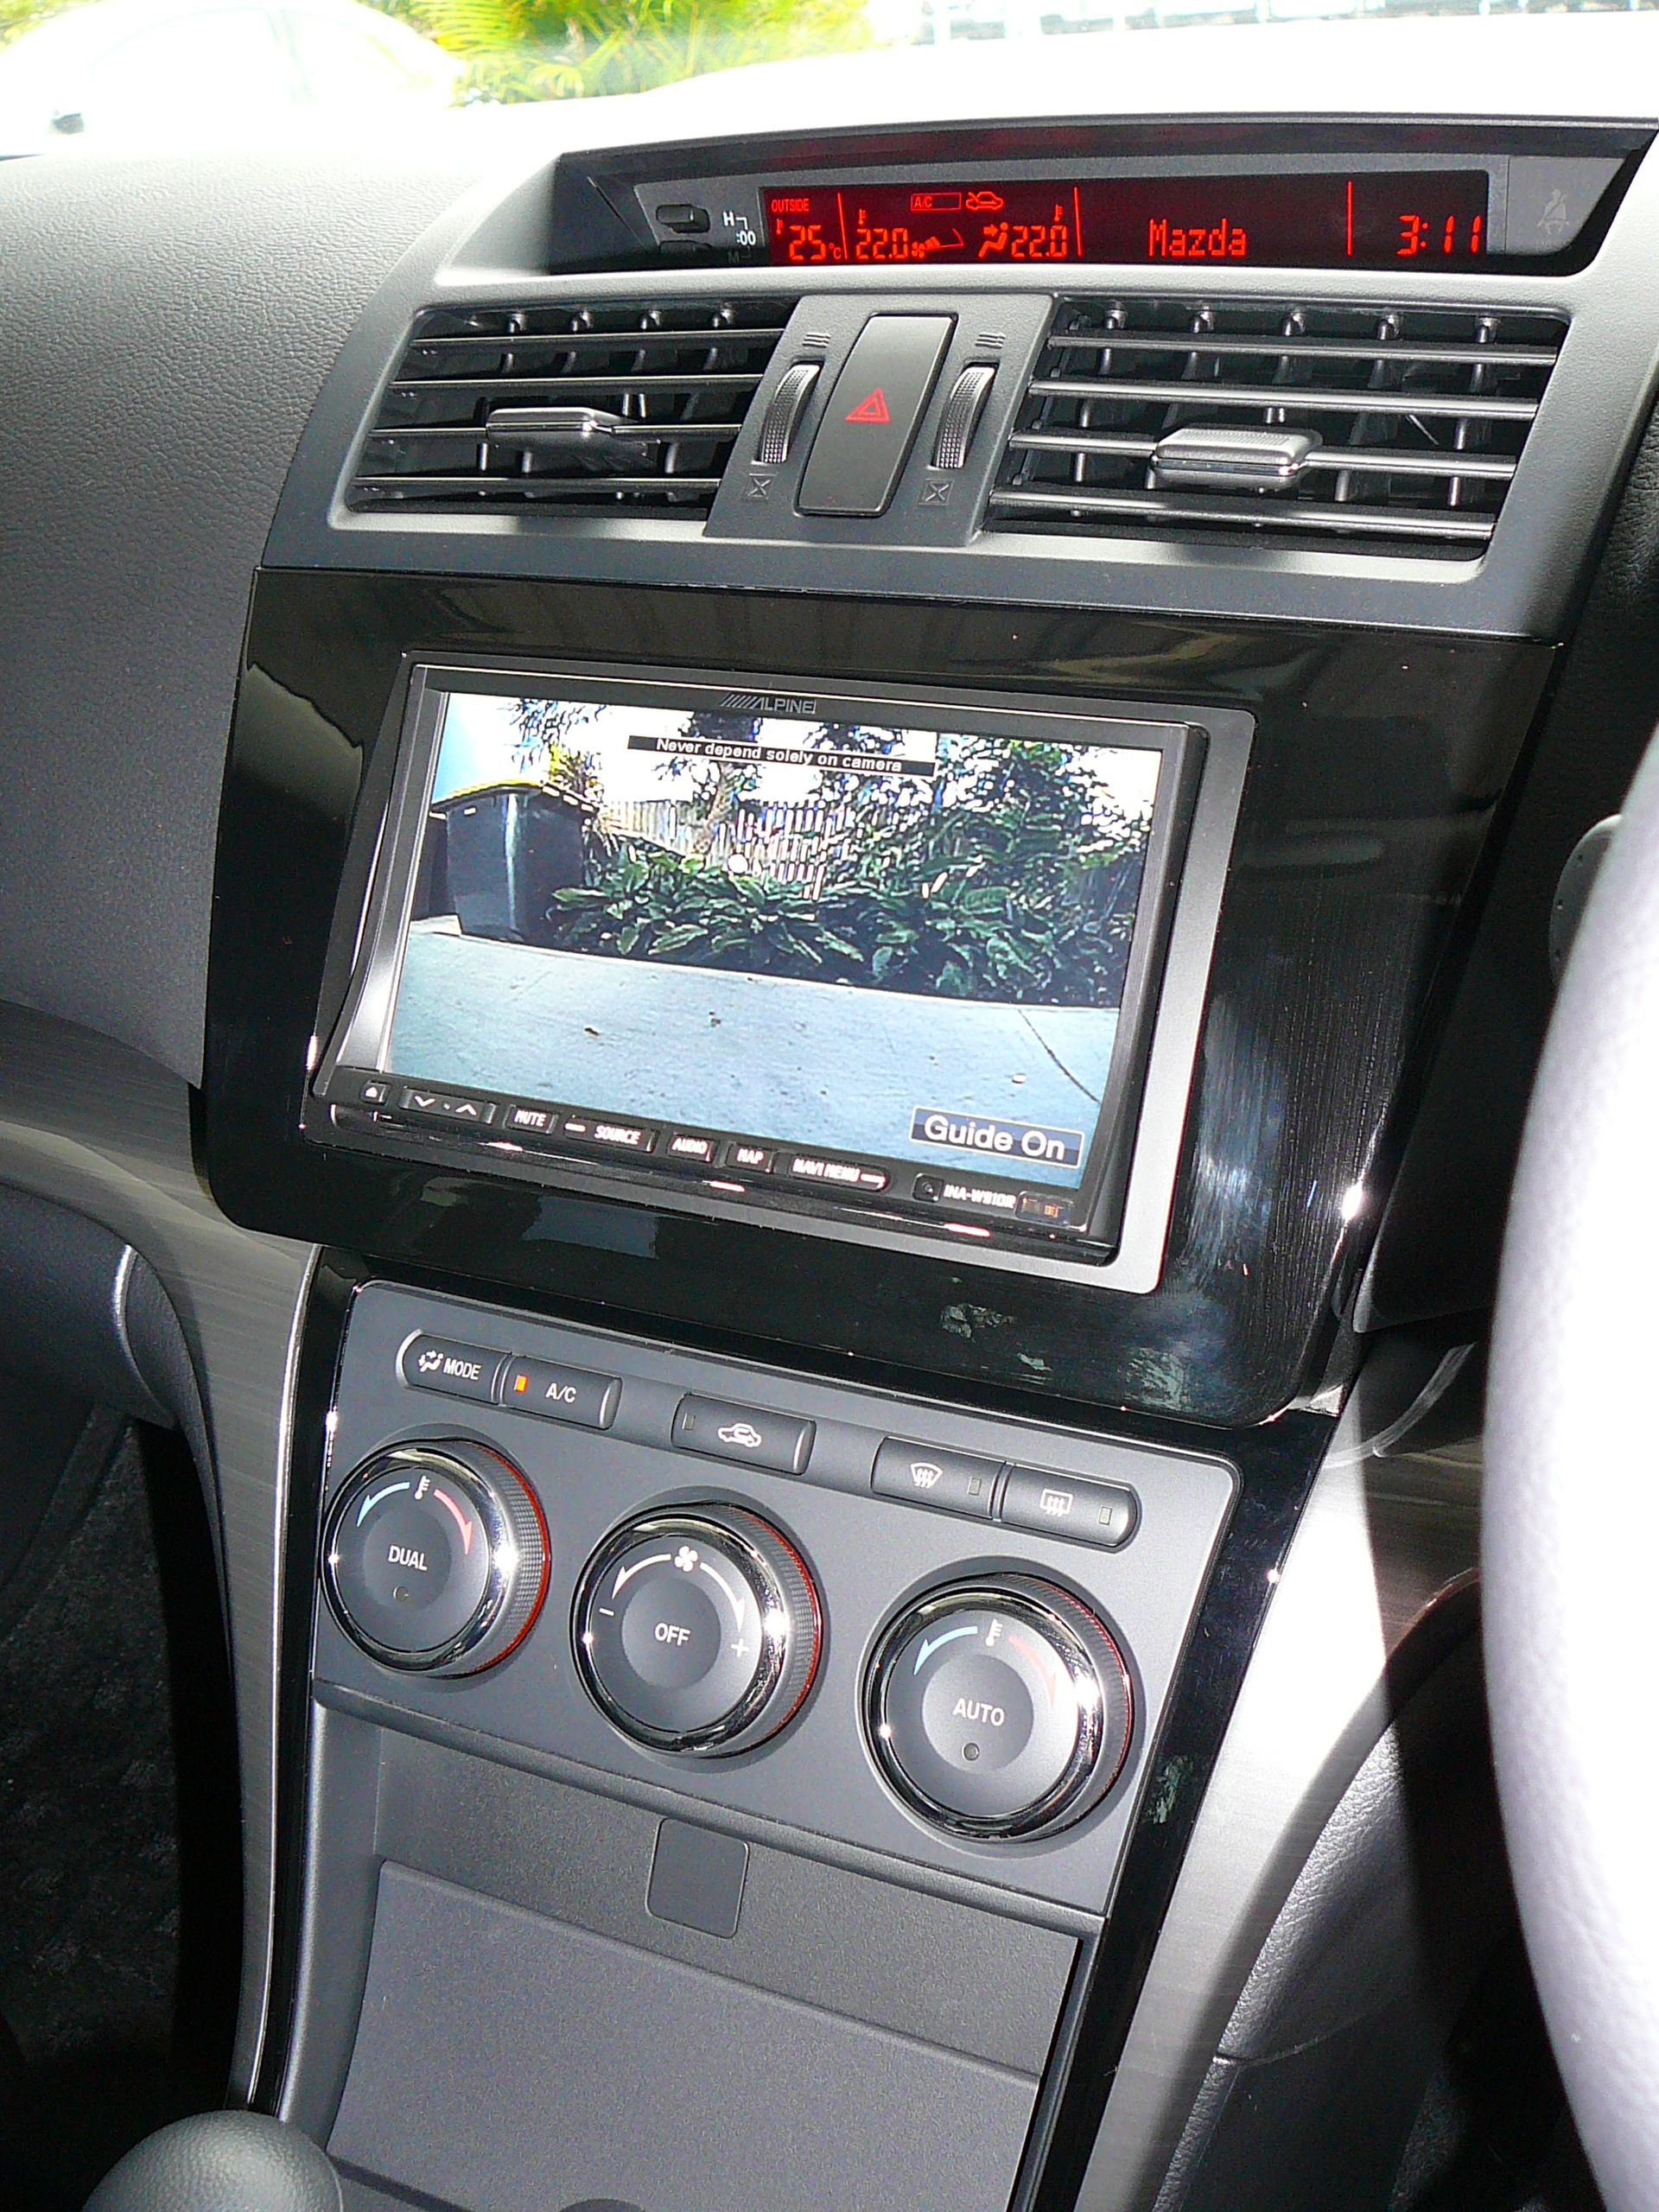 Mazda 6 2012, Alpine GPS Navigation & Reverse Camera